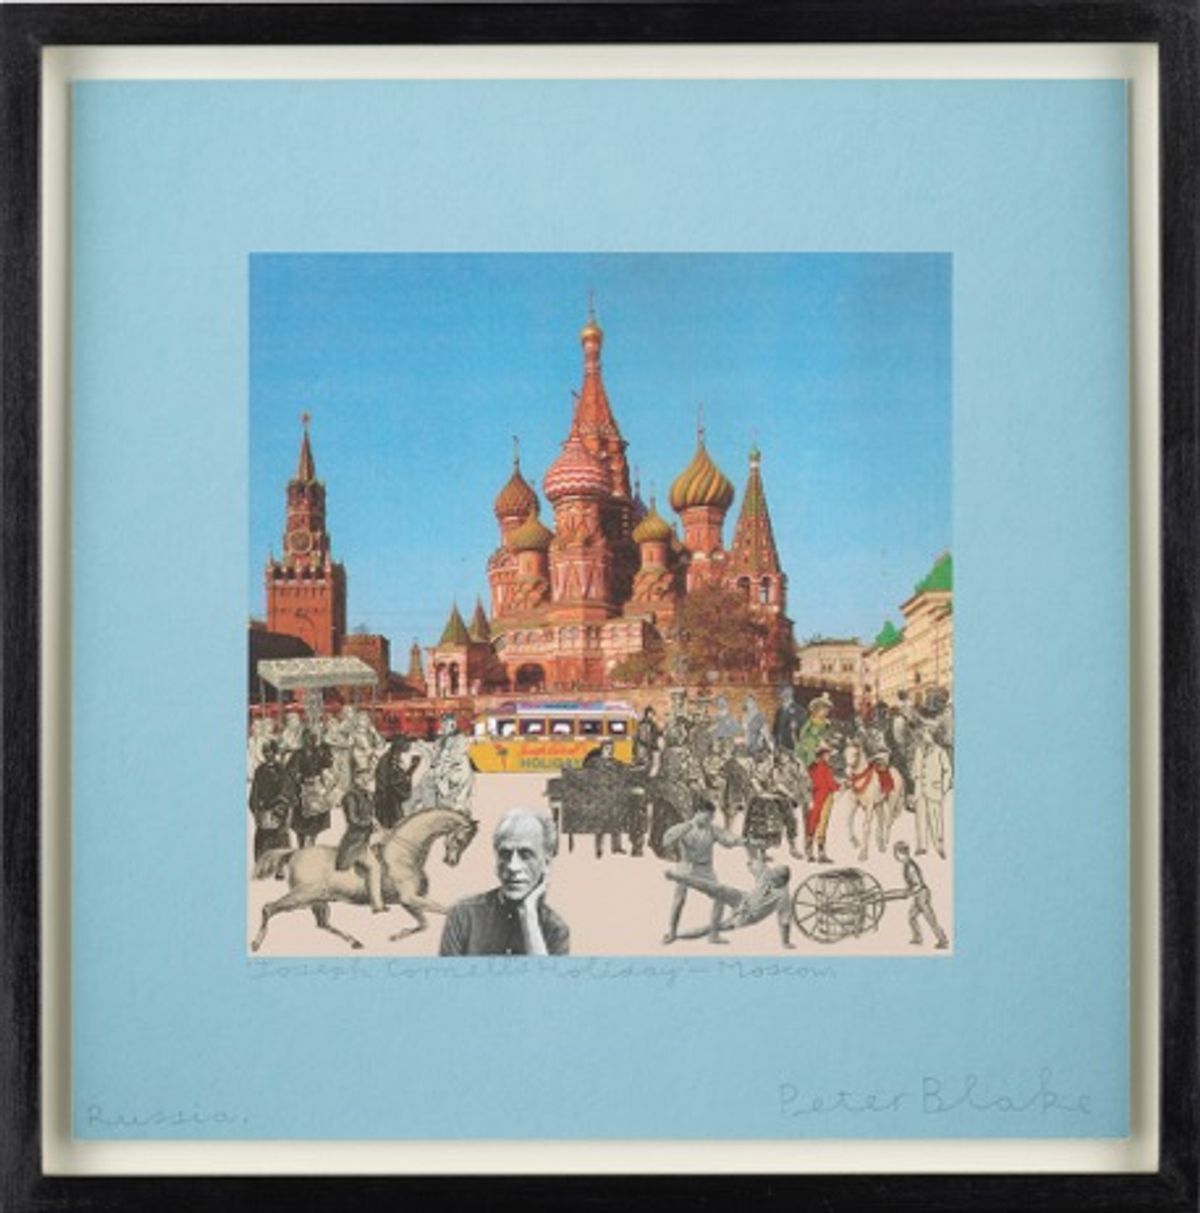 Peter Blake, Joseph Cornell’s Holiday – Russia, Moscow Image courtesy of Peter Blake and Waddington Custot.